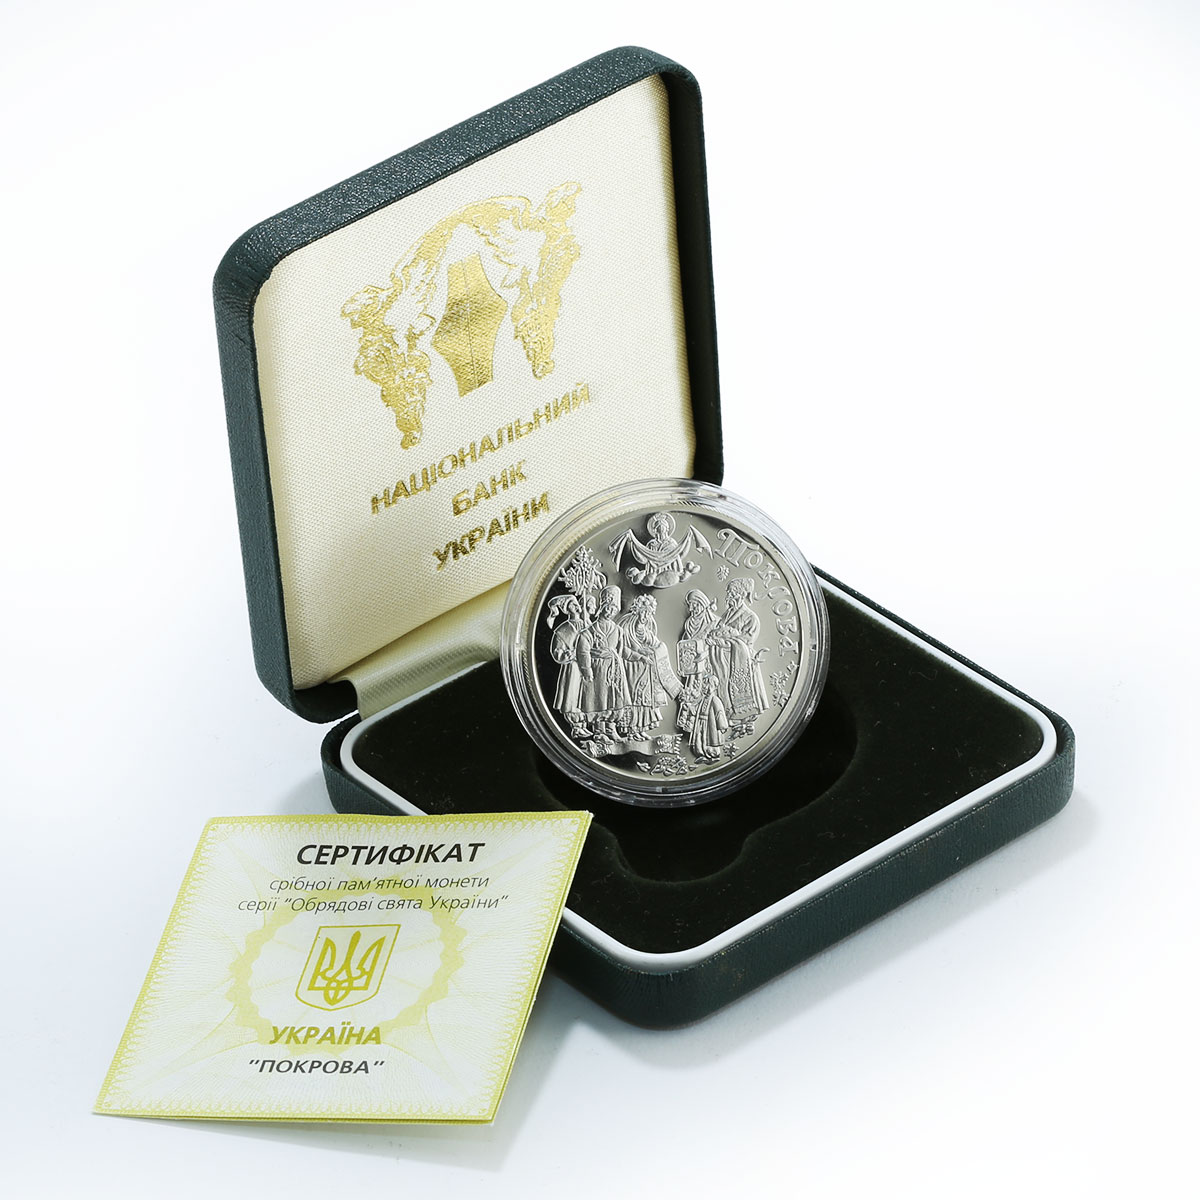 Ukraine 10 hryvnia Protection of Virgin Pokrova silver proof coin 2005